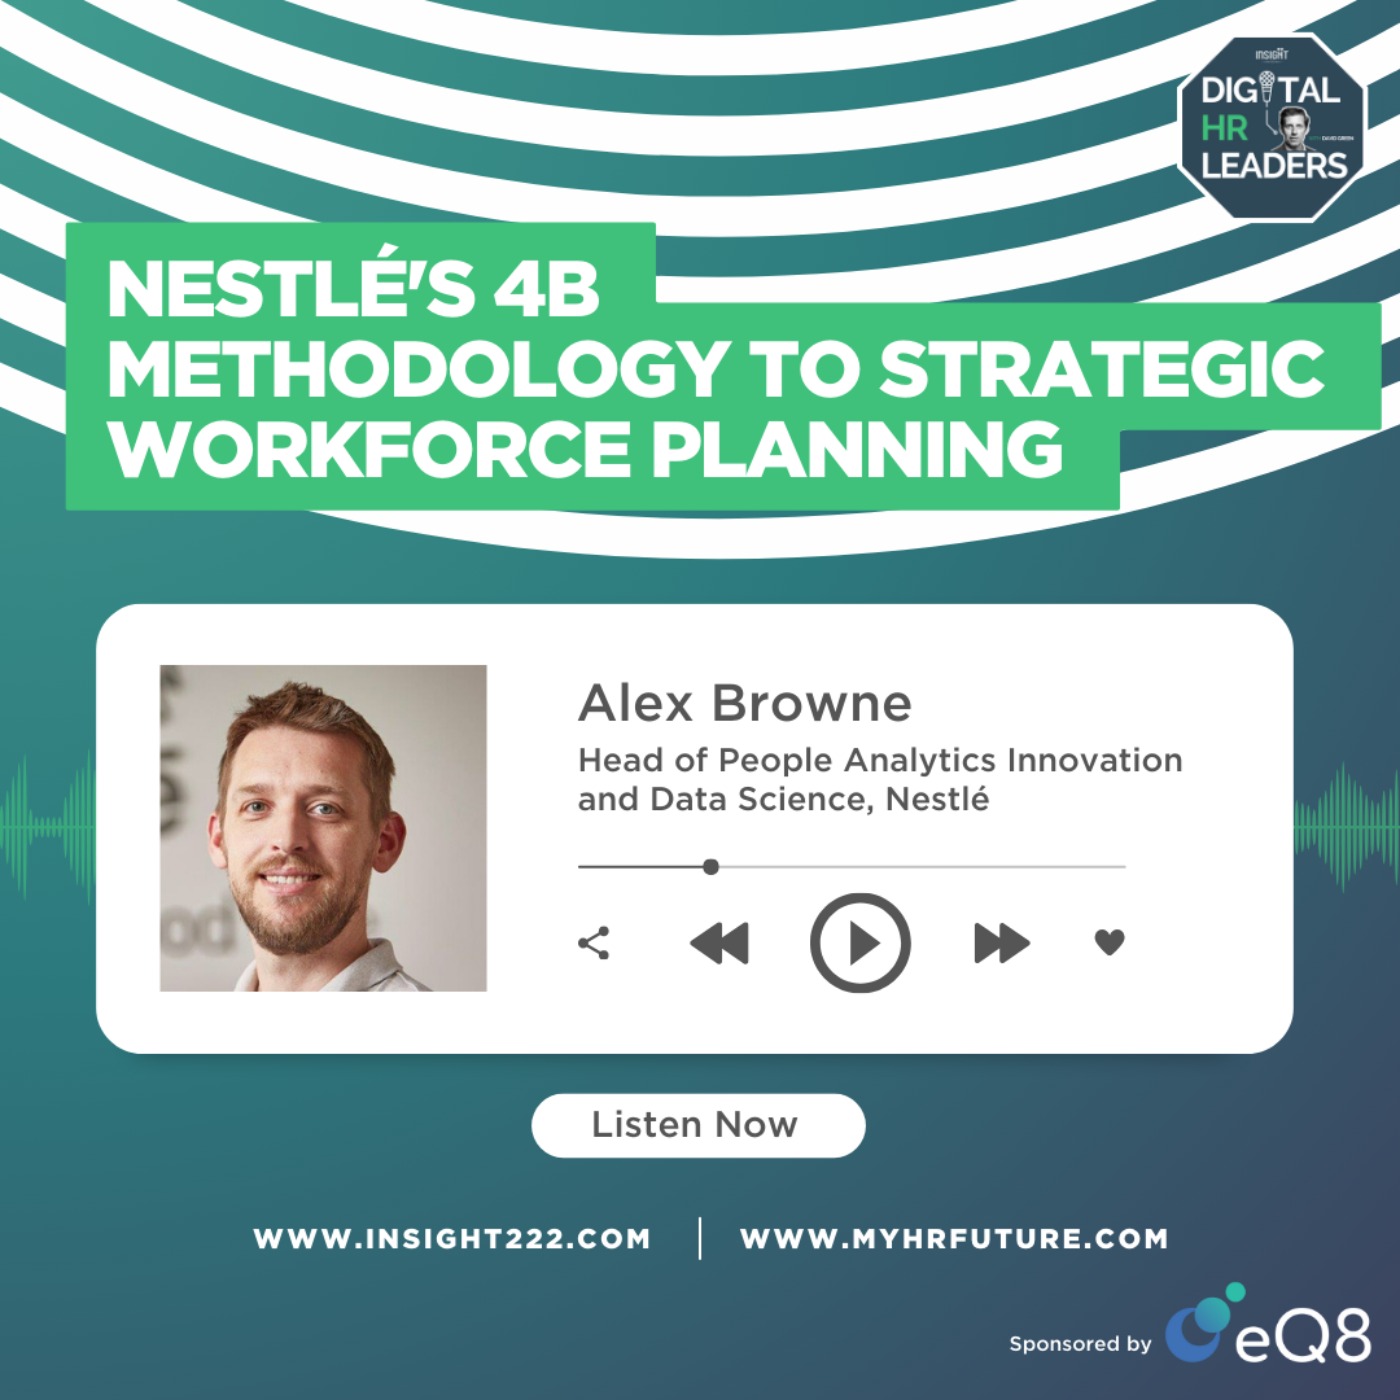 Nestlé's 4B Methodology to Strategic Workforce Planning (an Interview with Alex Browne)